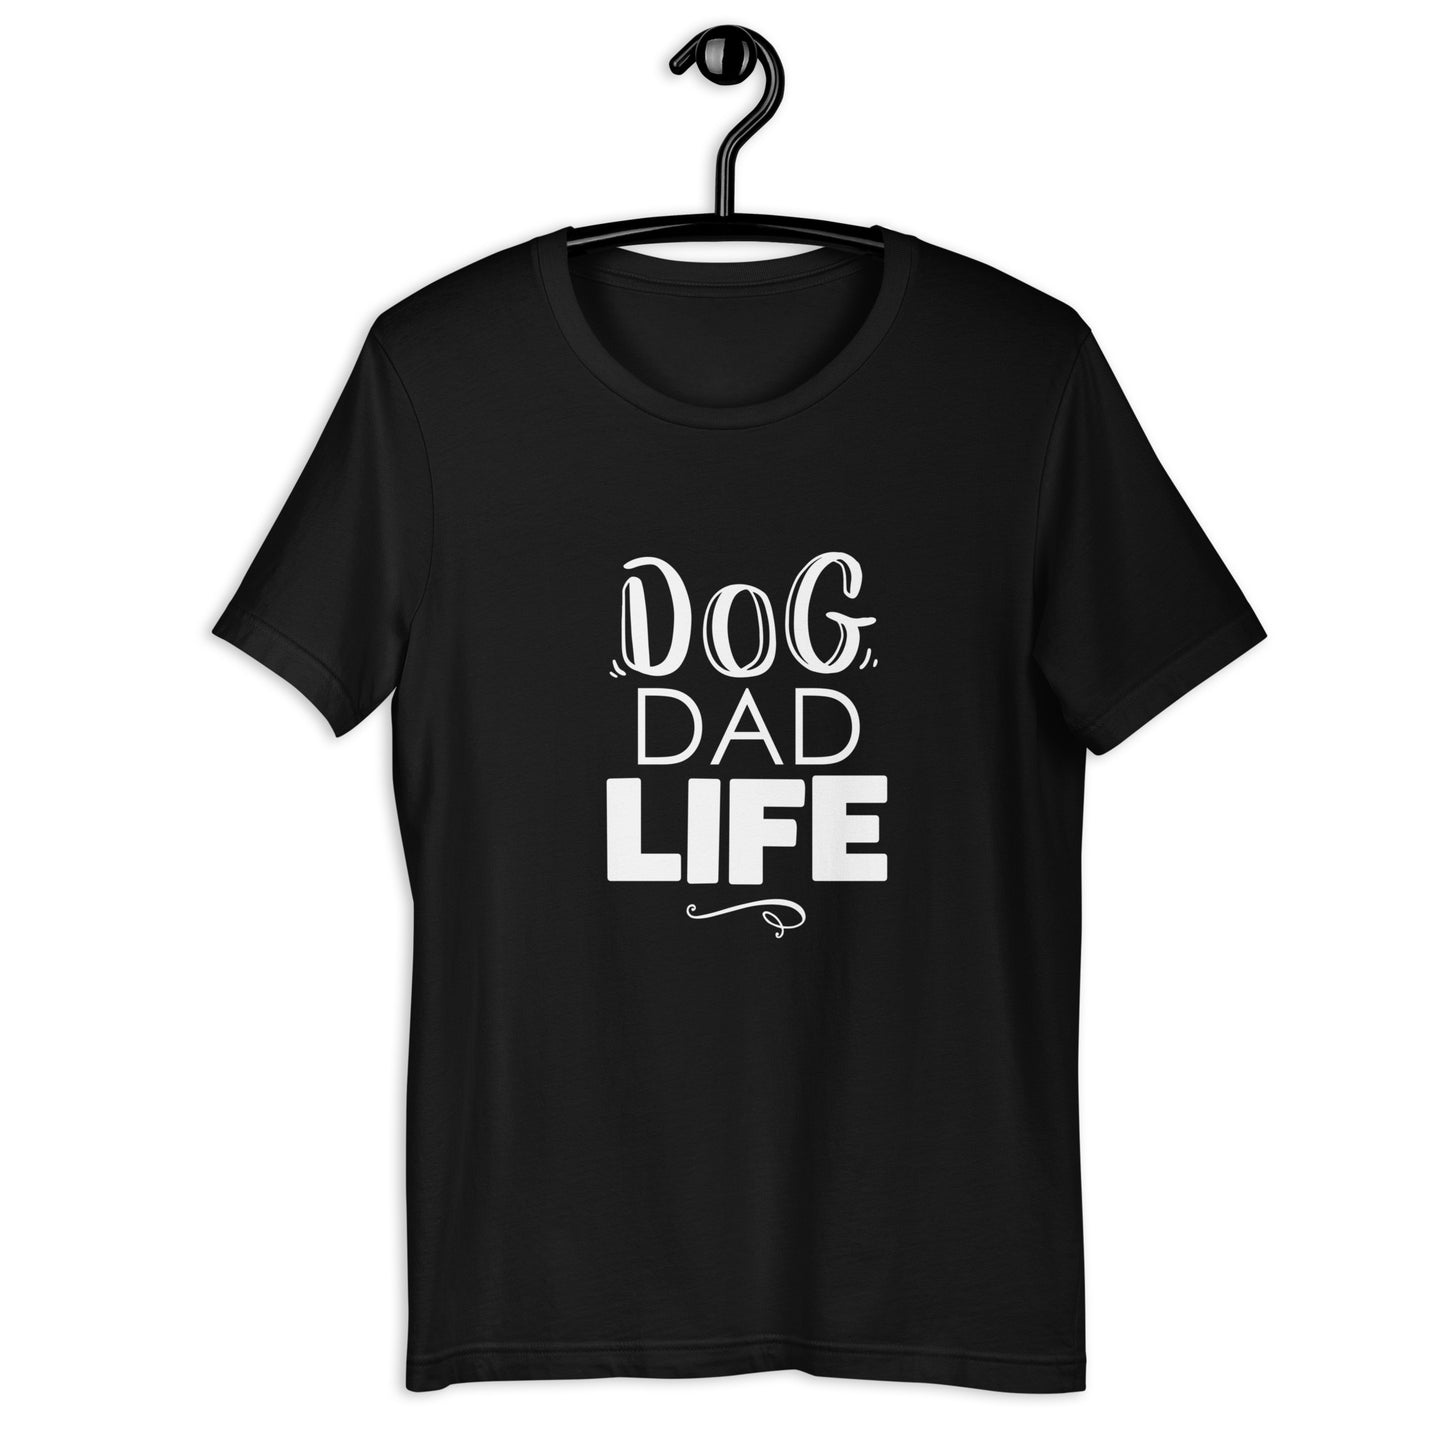 DOG DAD LIFE - Unisex t-shirt